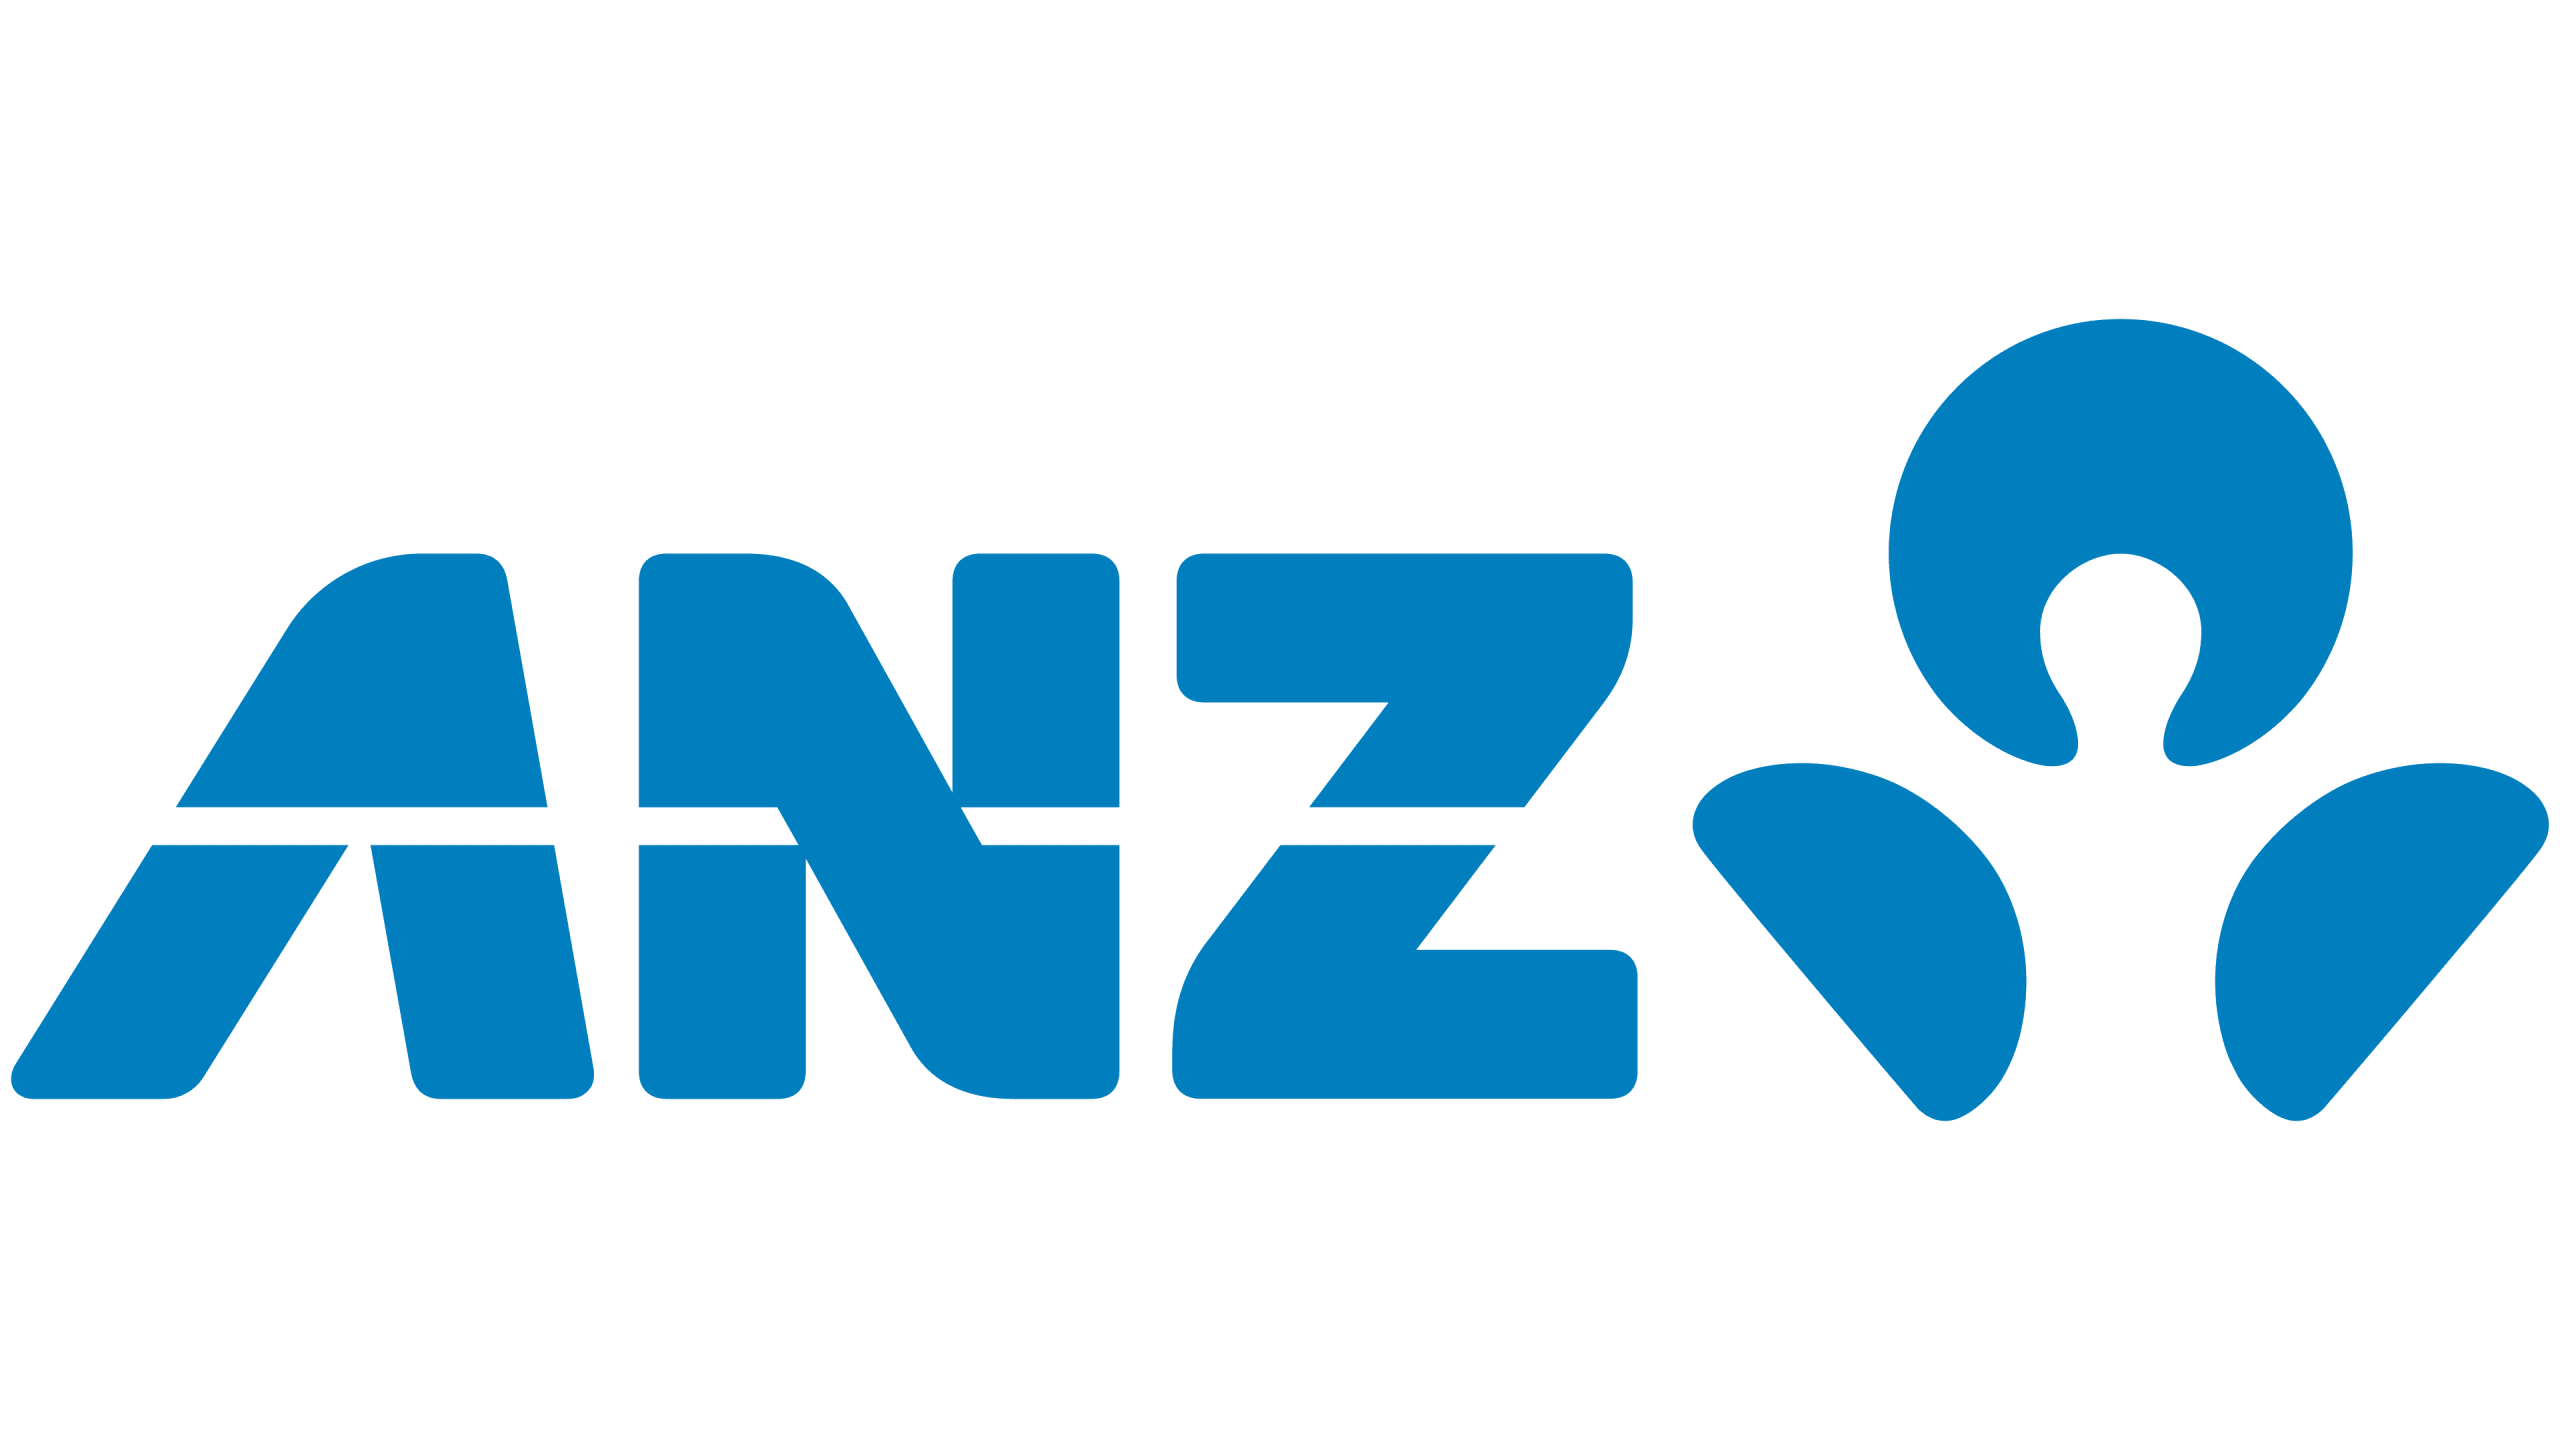 anz travel insurance new zealand